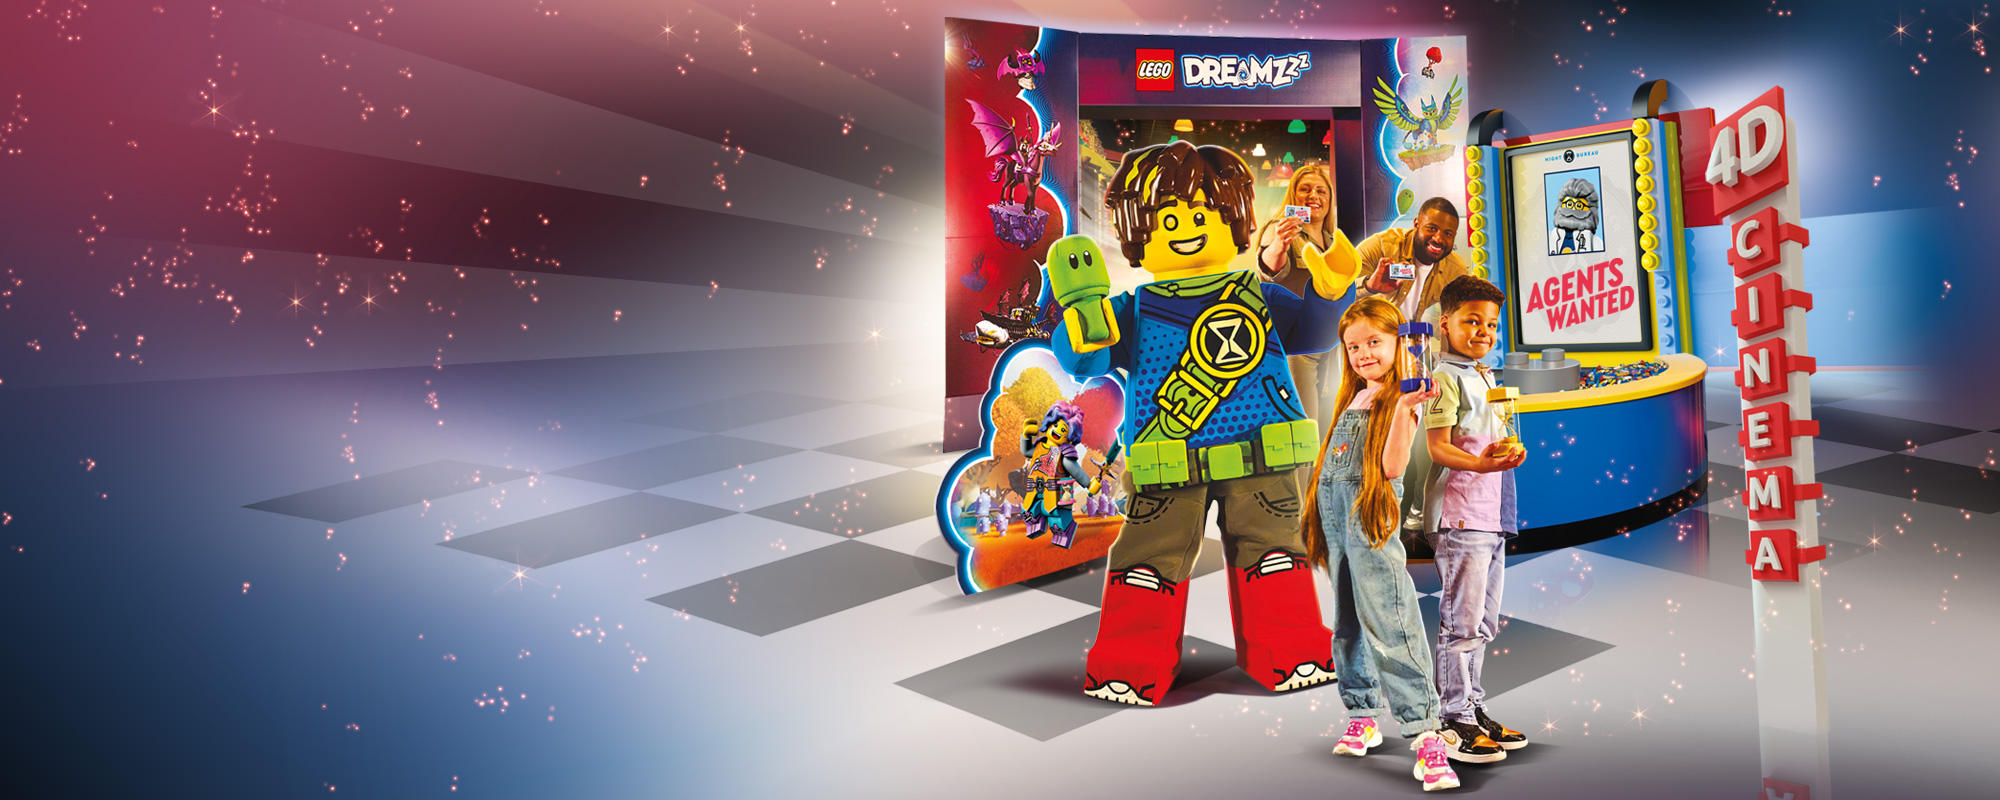 Family of 4 viewing LEGO Dreamzzz 4D cinema movie at LEGOLAND Discovery Center Arizona